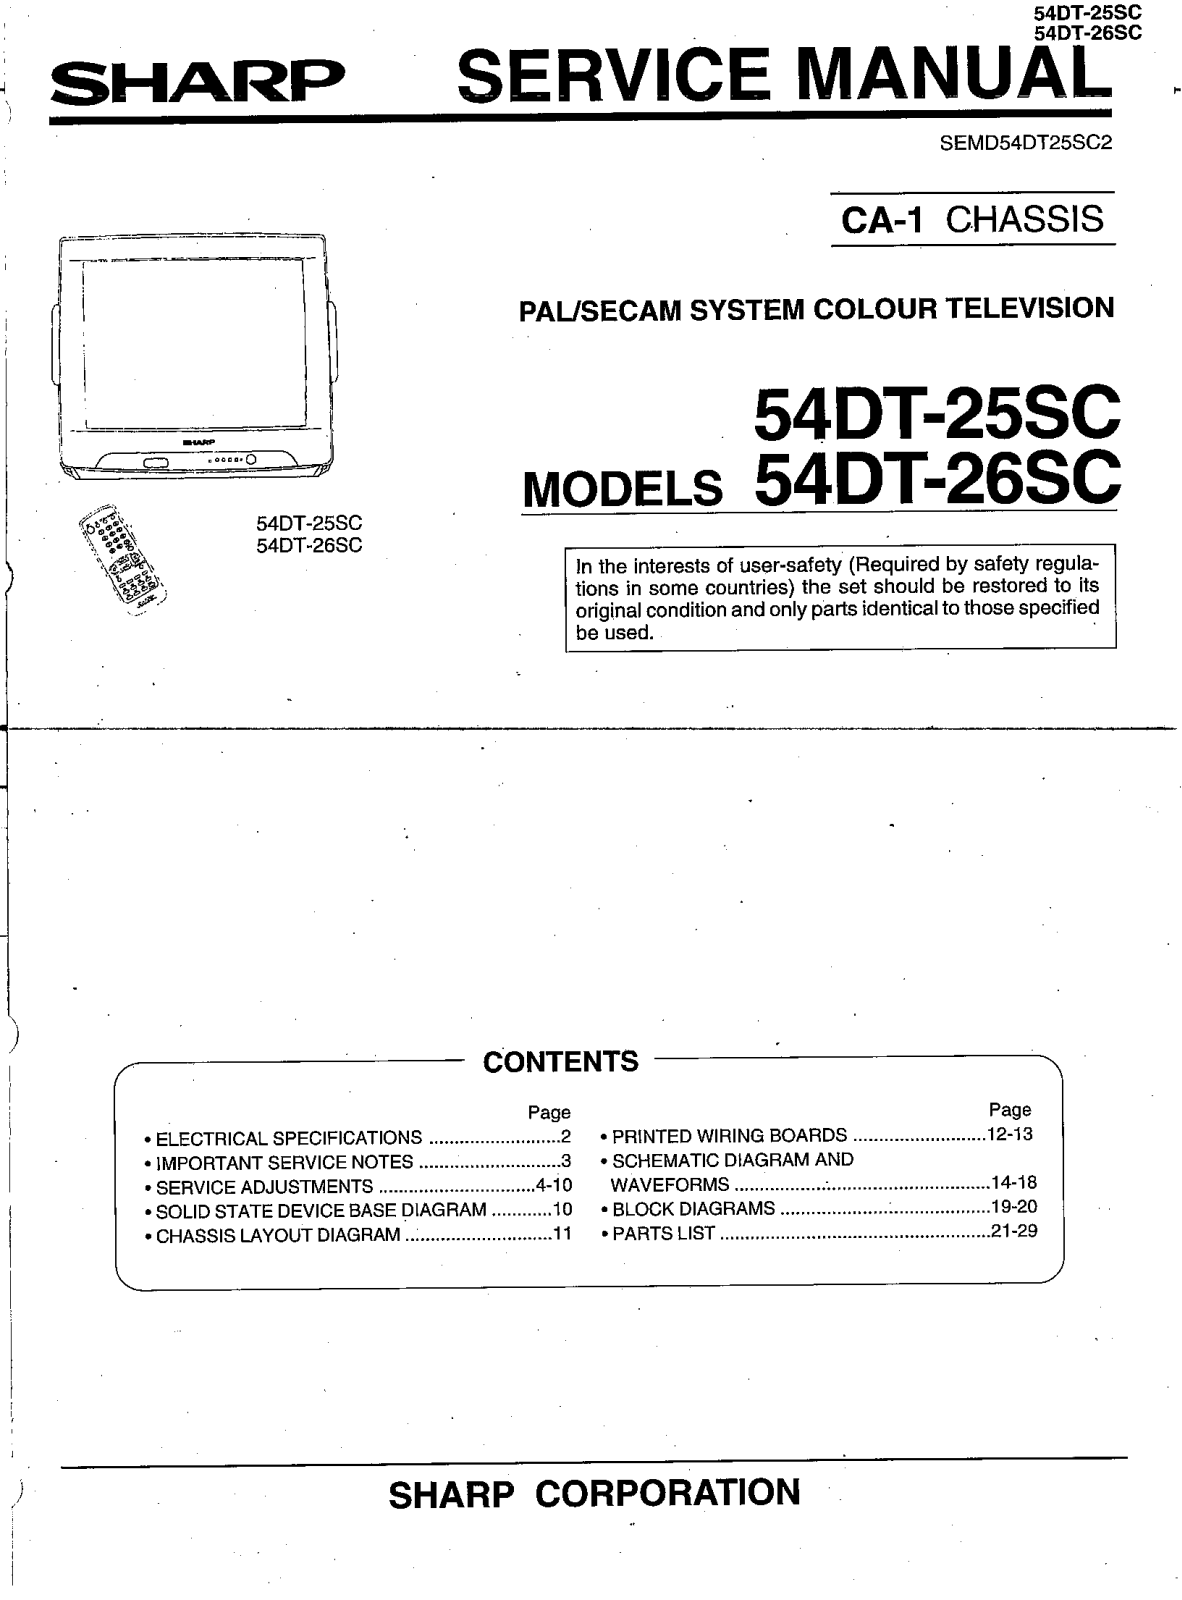 Sharp 54DT-26SC, 54DT-25SC User Manual